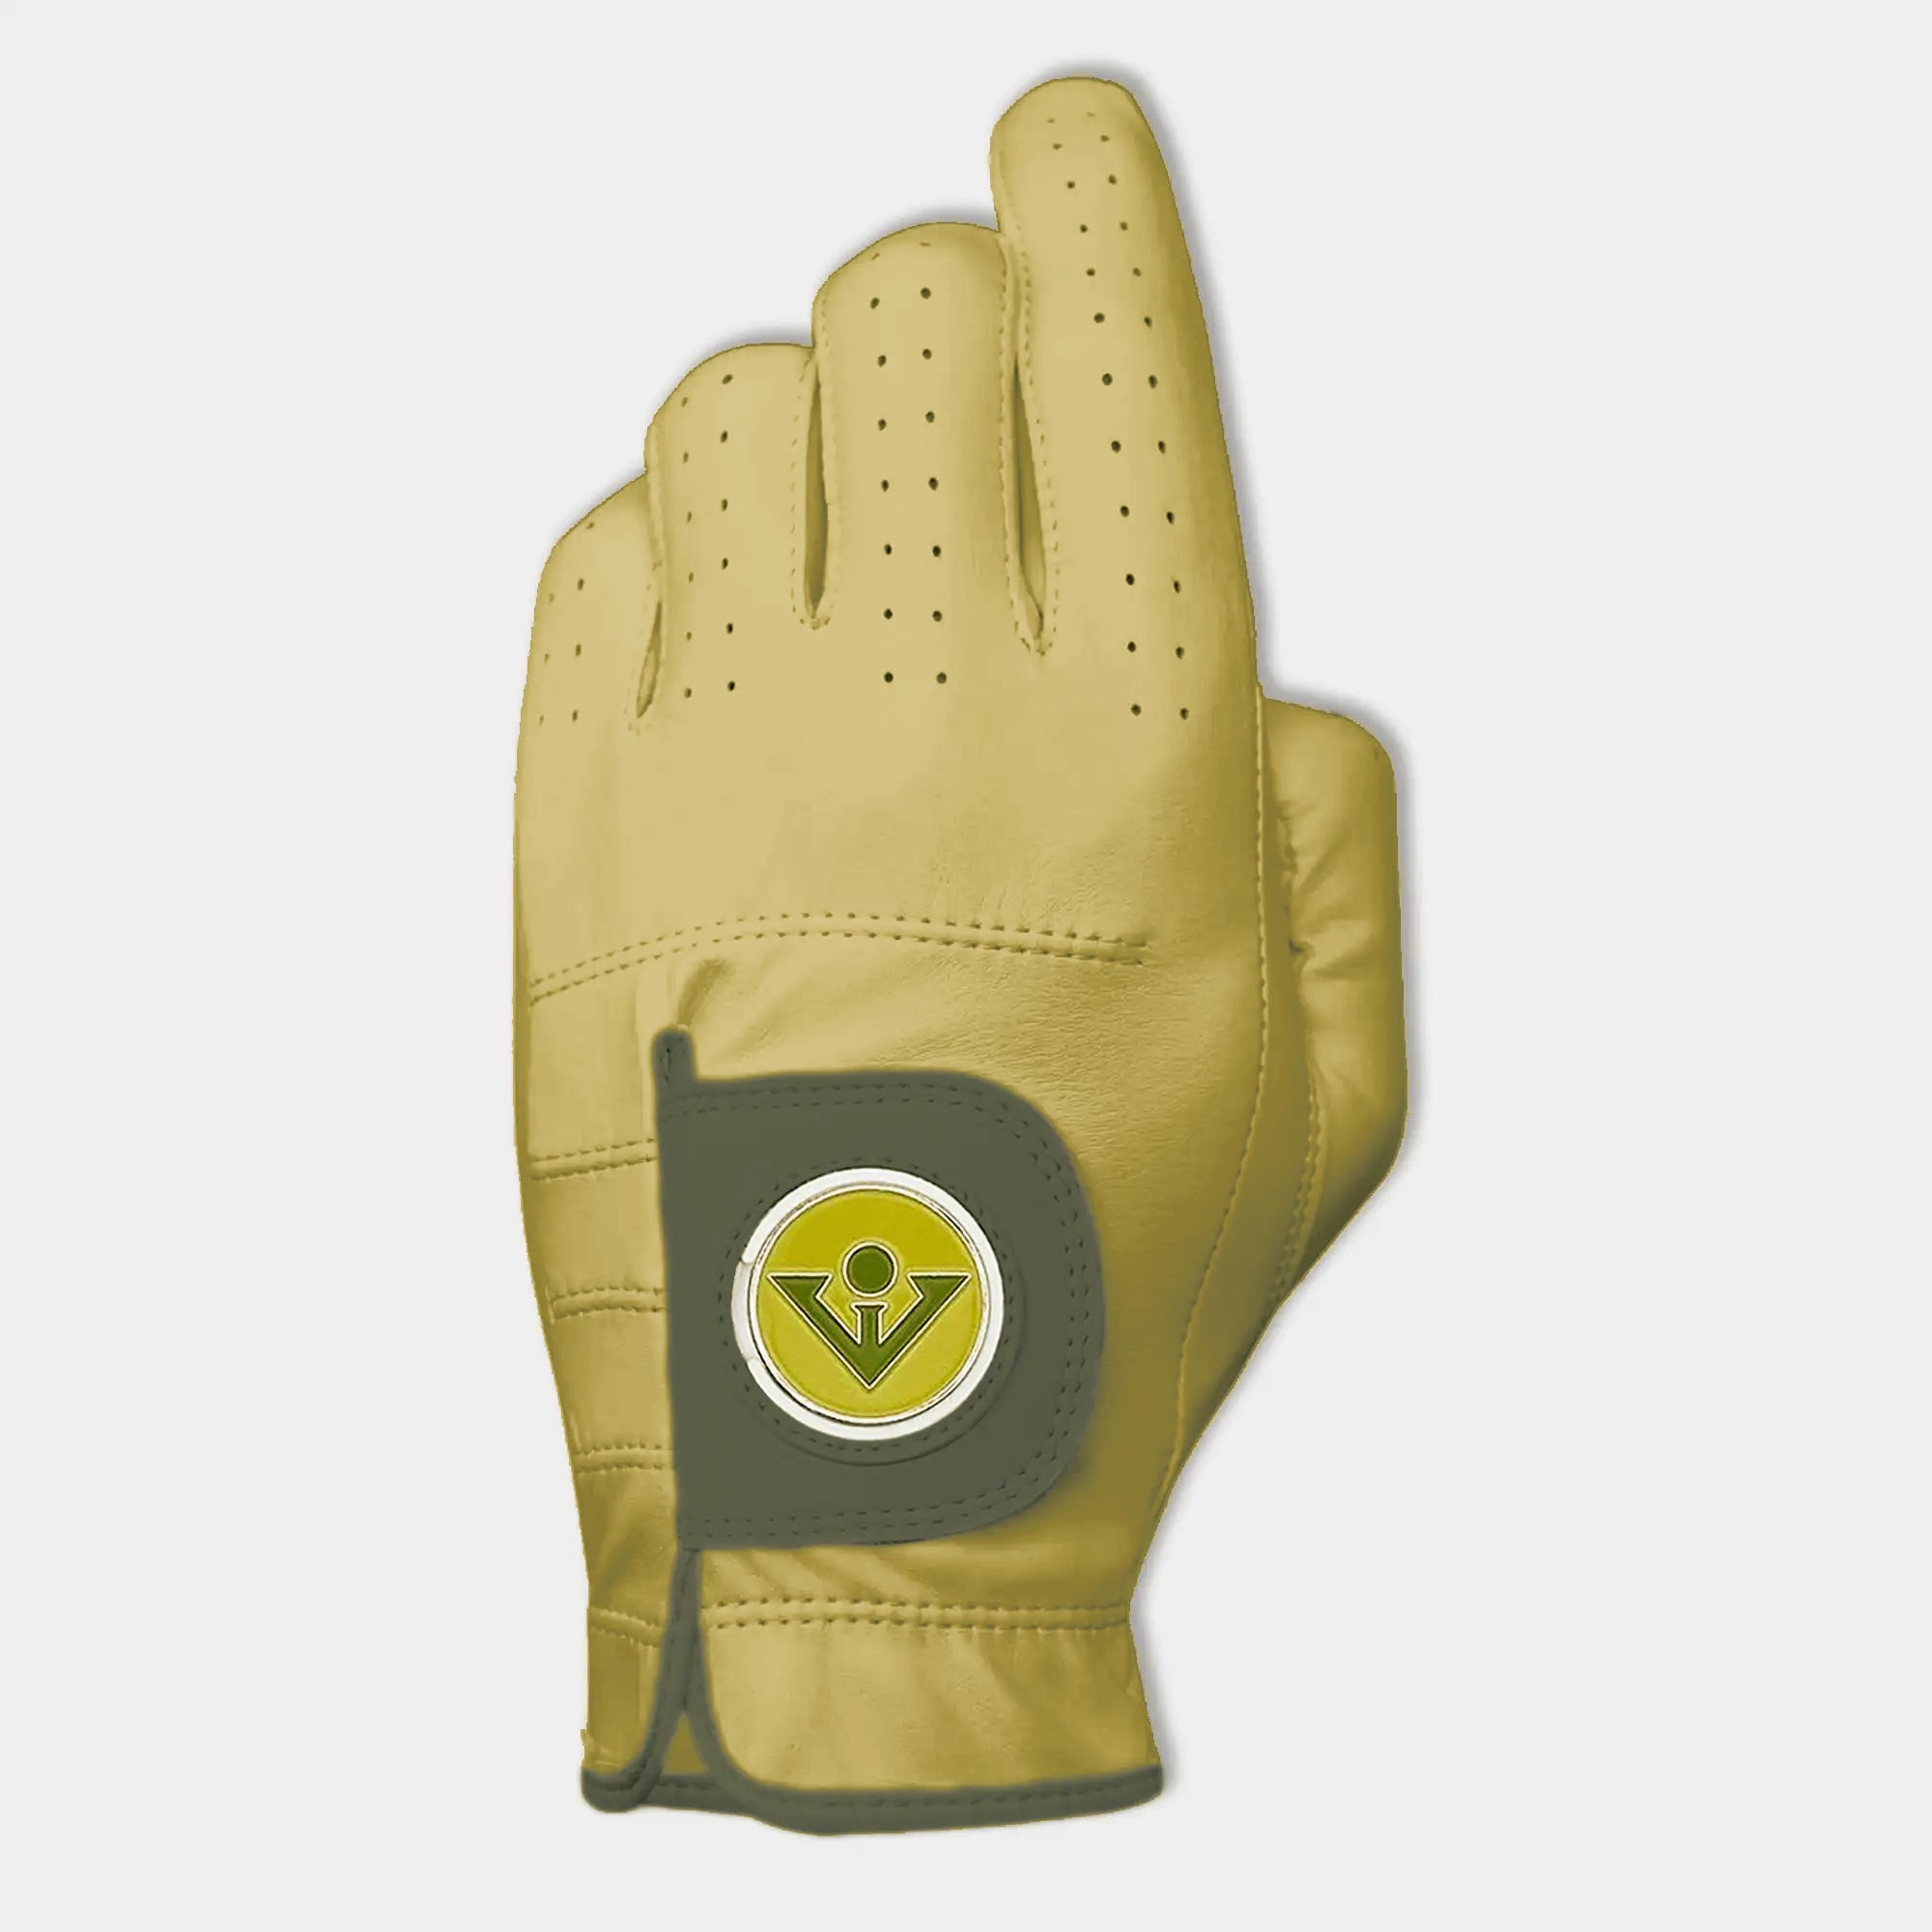 Women's Greenwich Harvest, Green and yellow Golf Glove. Designer Golf gloves for women.